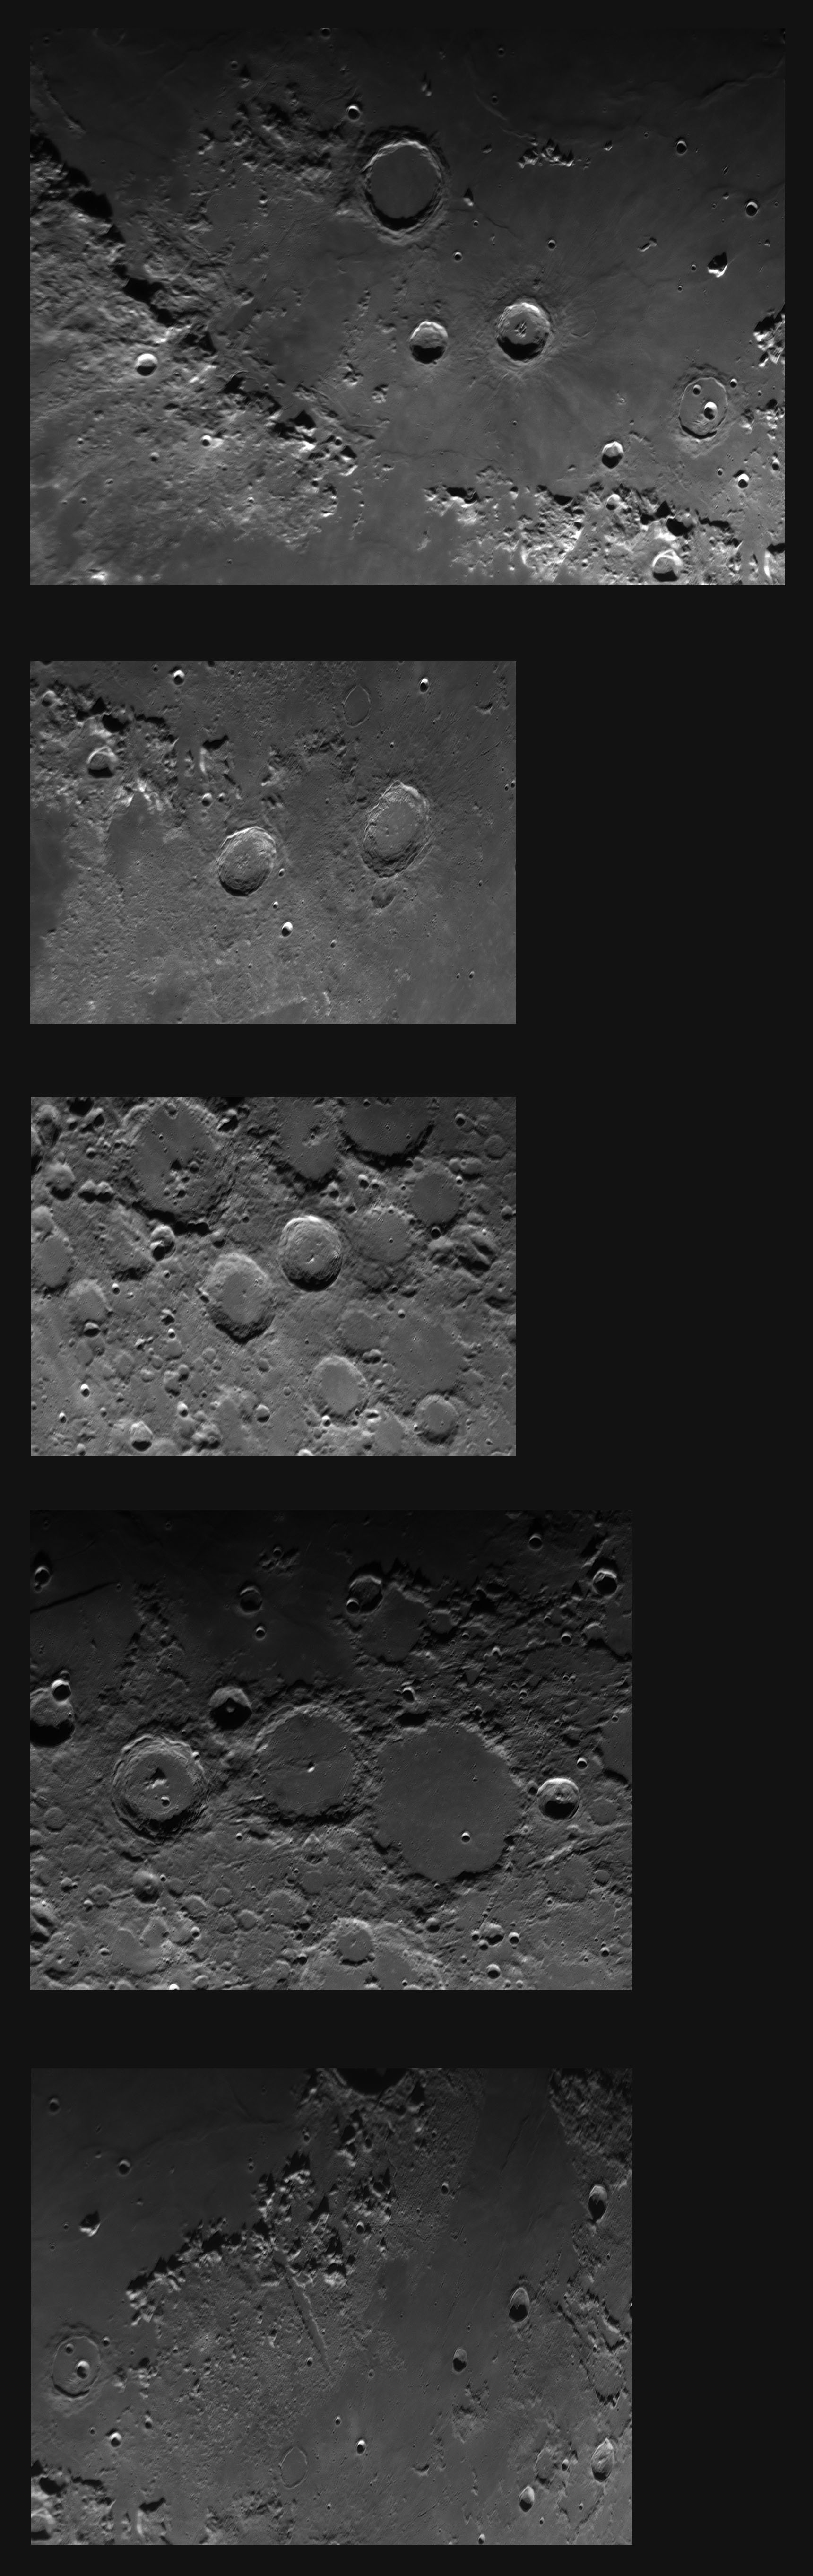 170106_moons-5 pics comp.jpg